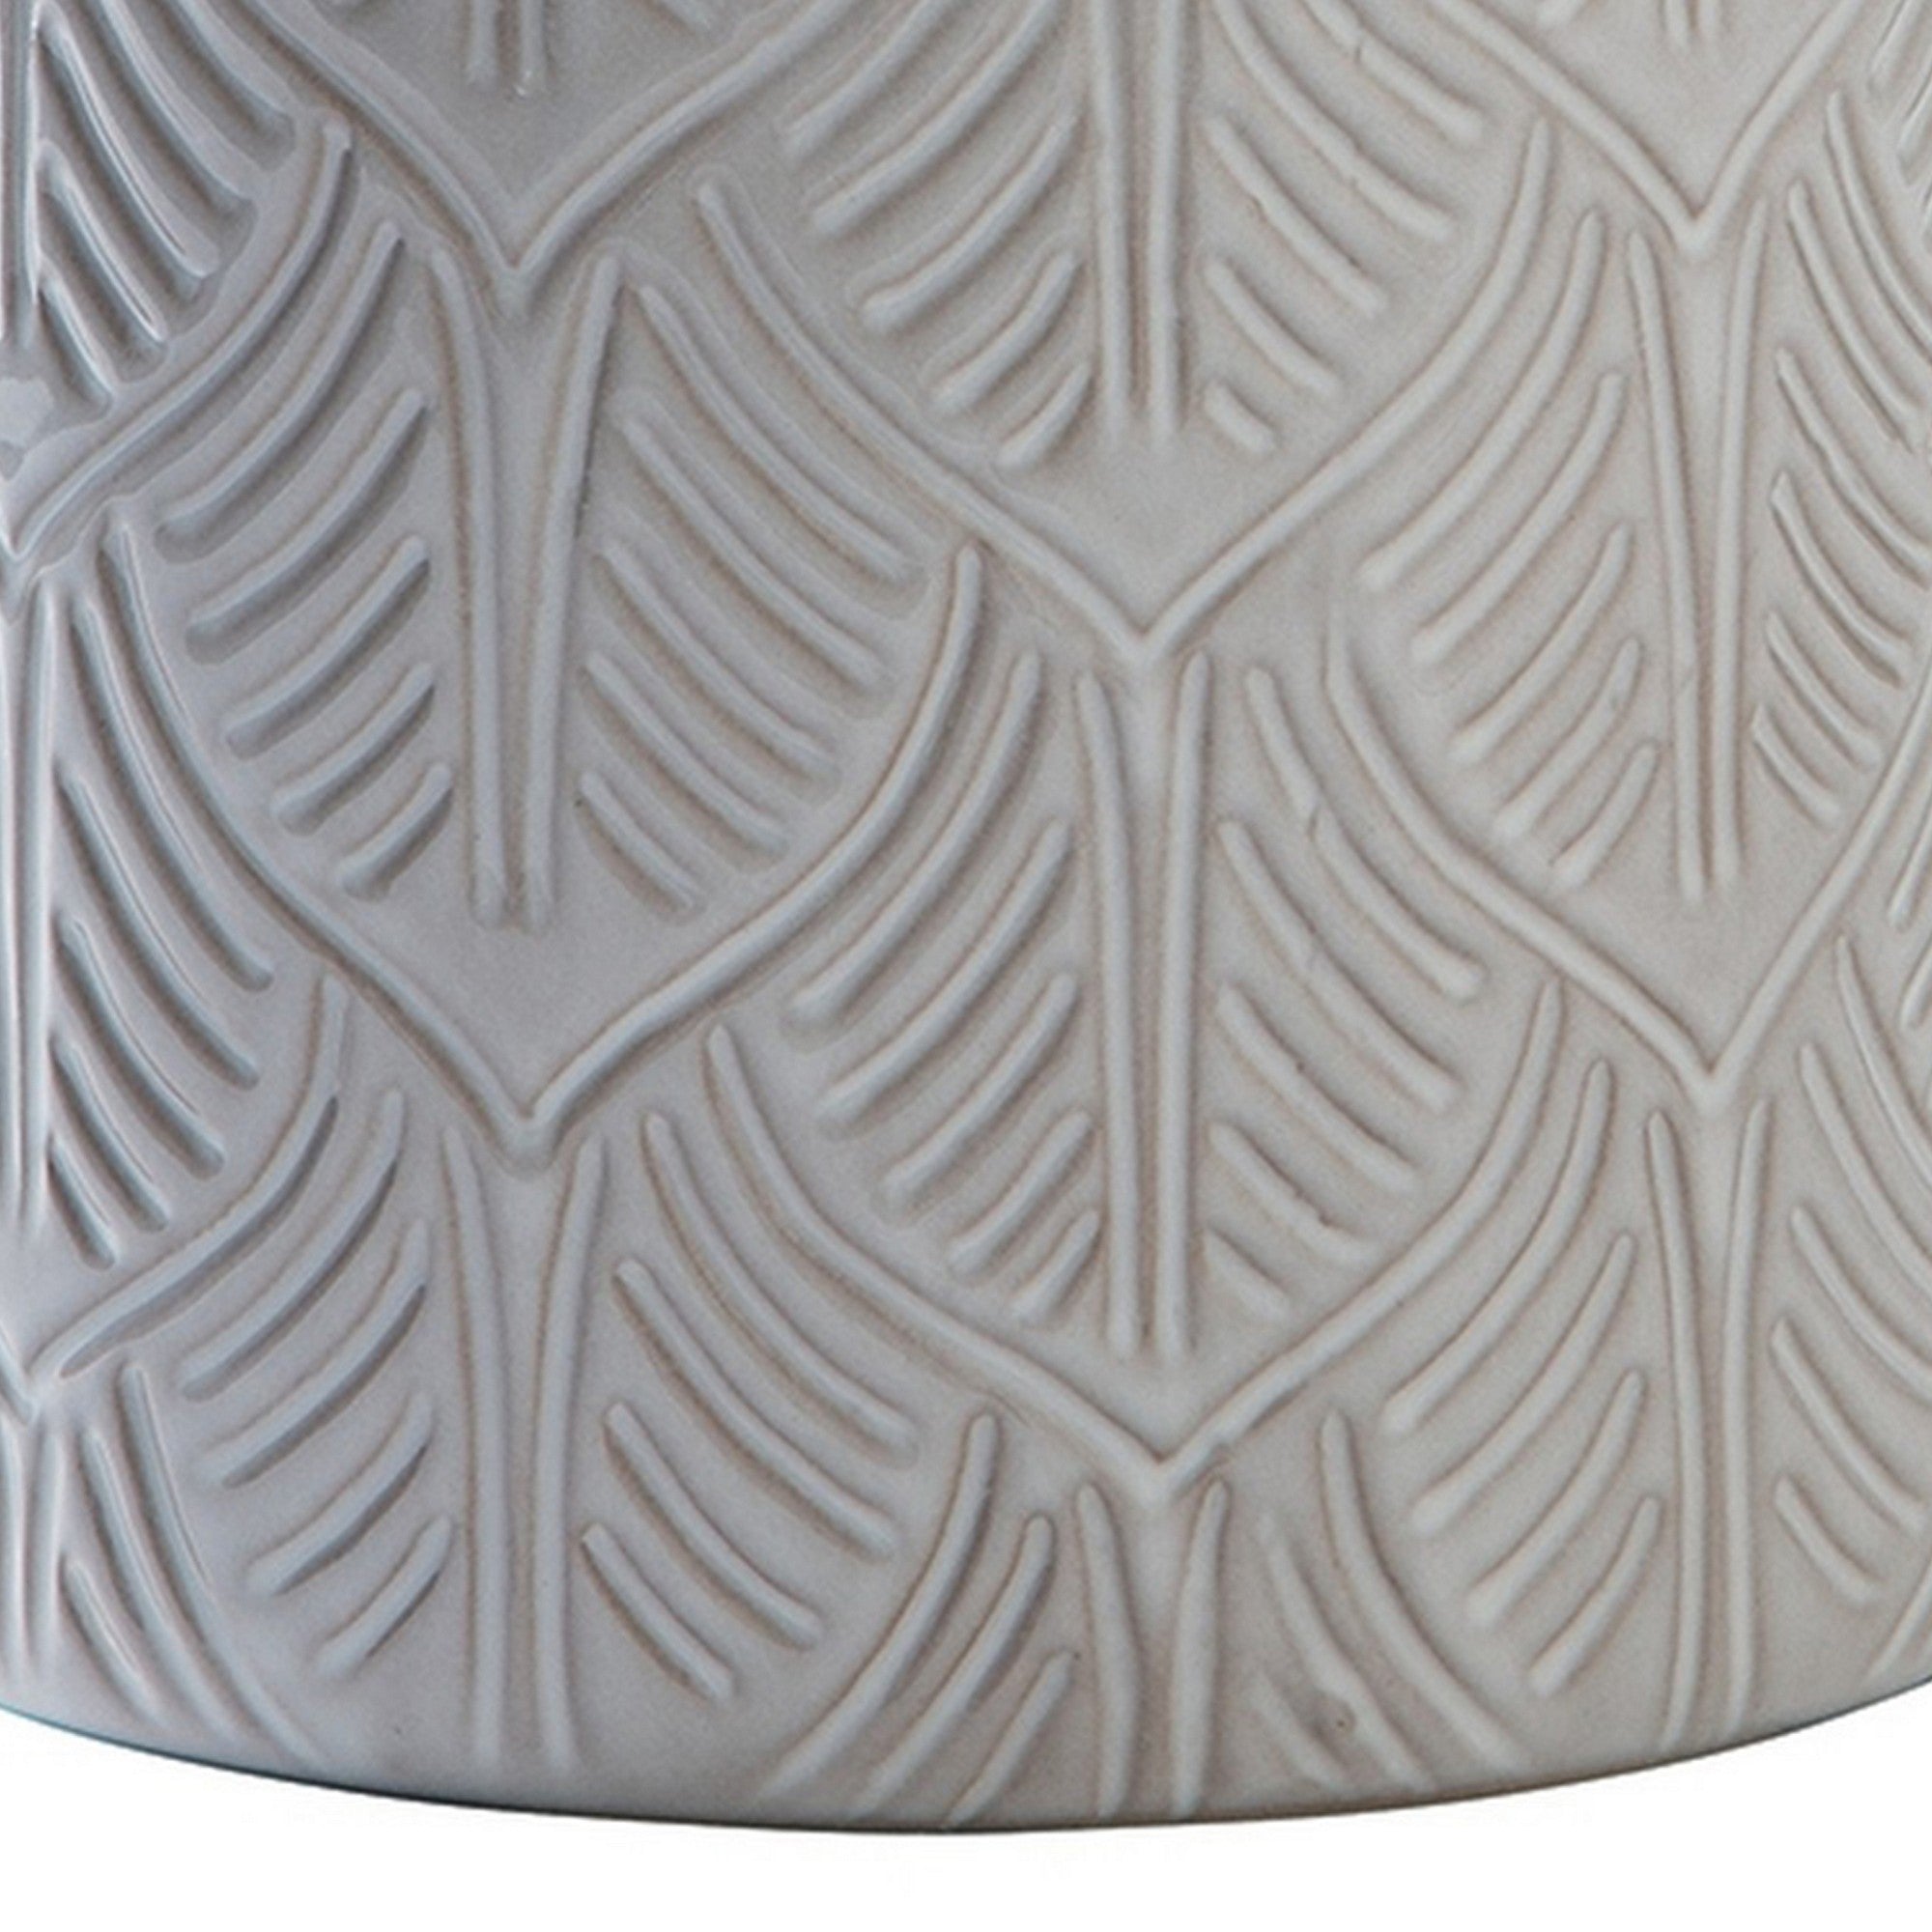 Vase with Ceramic Textured Leaf Pattern, Set of